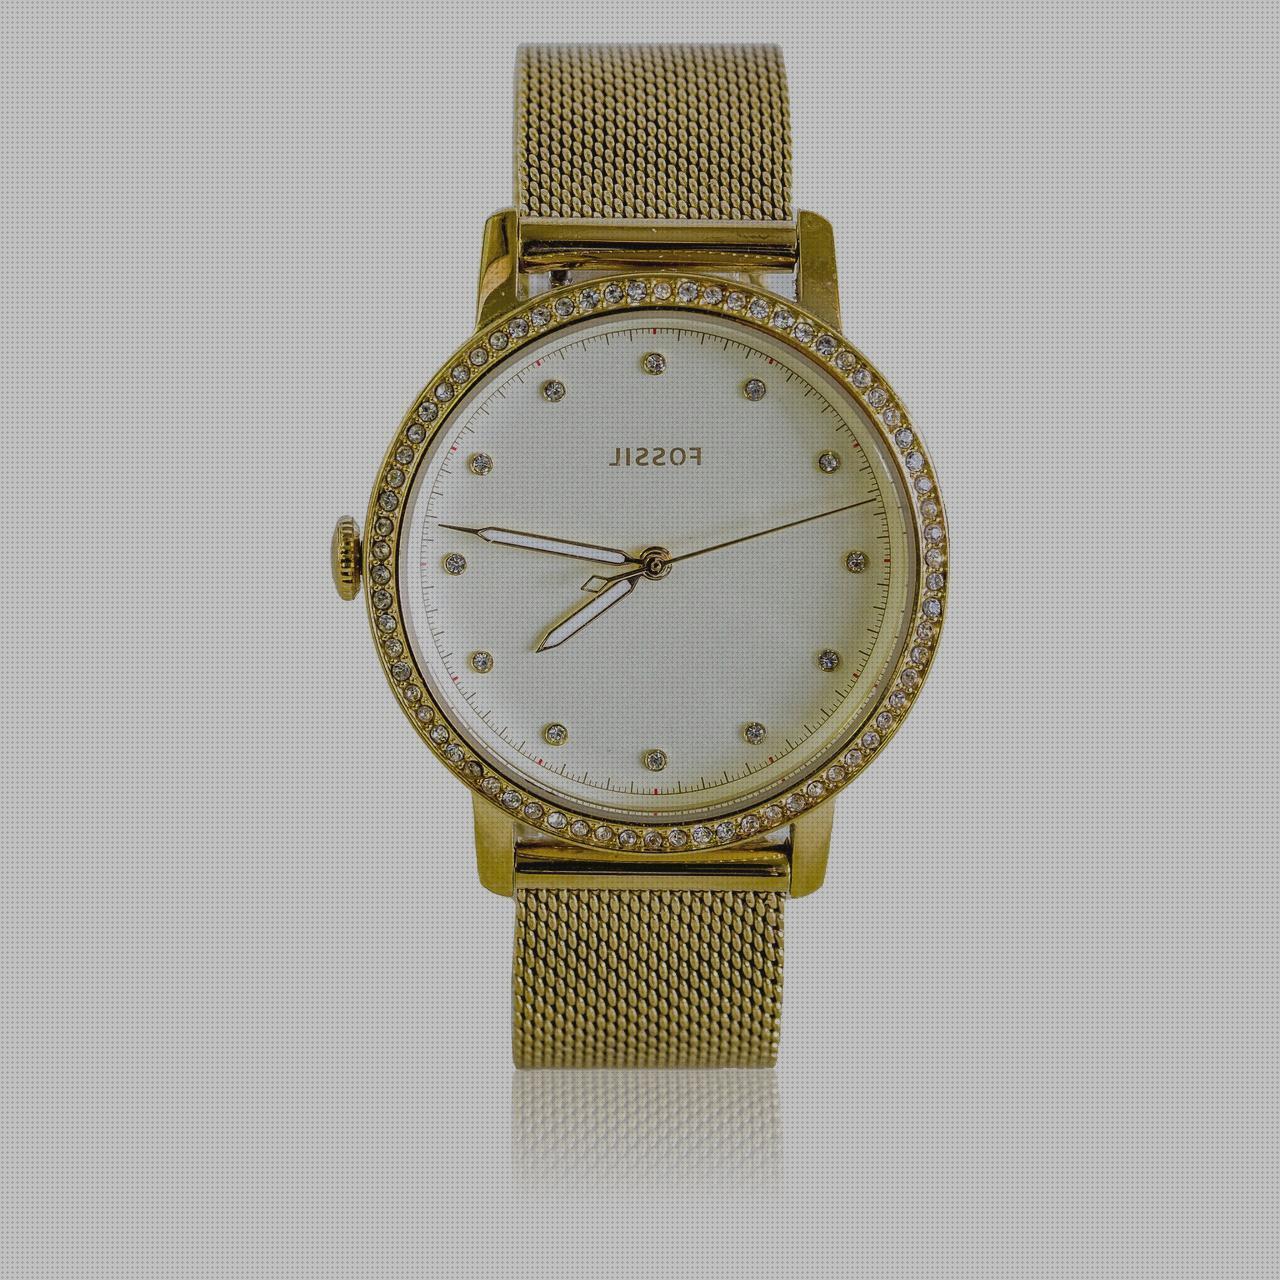 ¿Dónde poder comprar relojes rolex relojes oro blanco relojes rolex mujer?